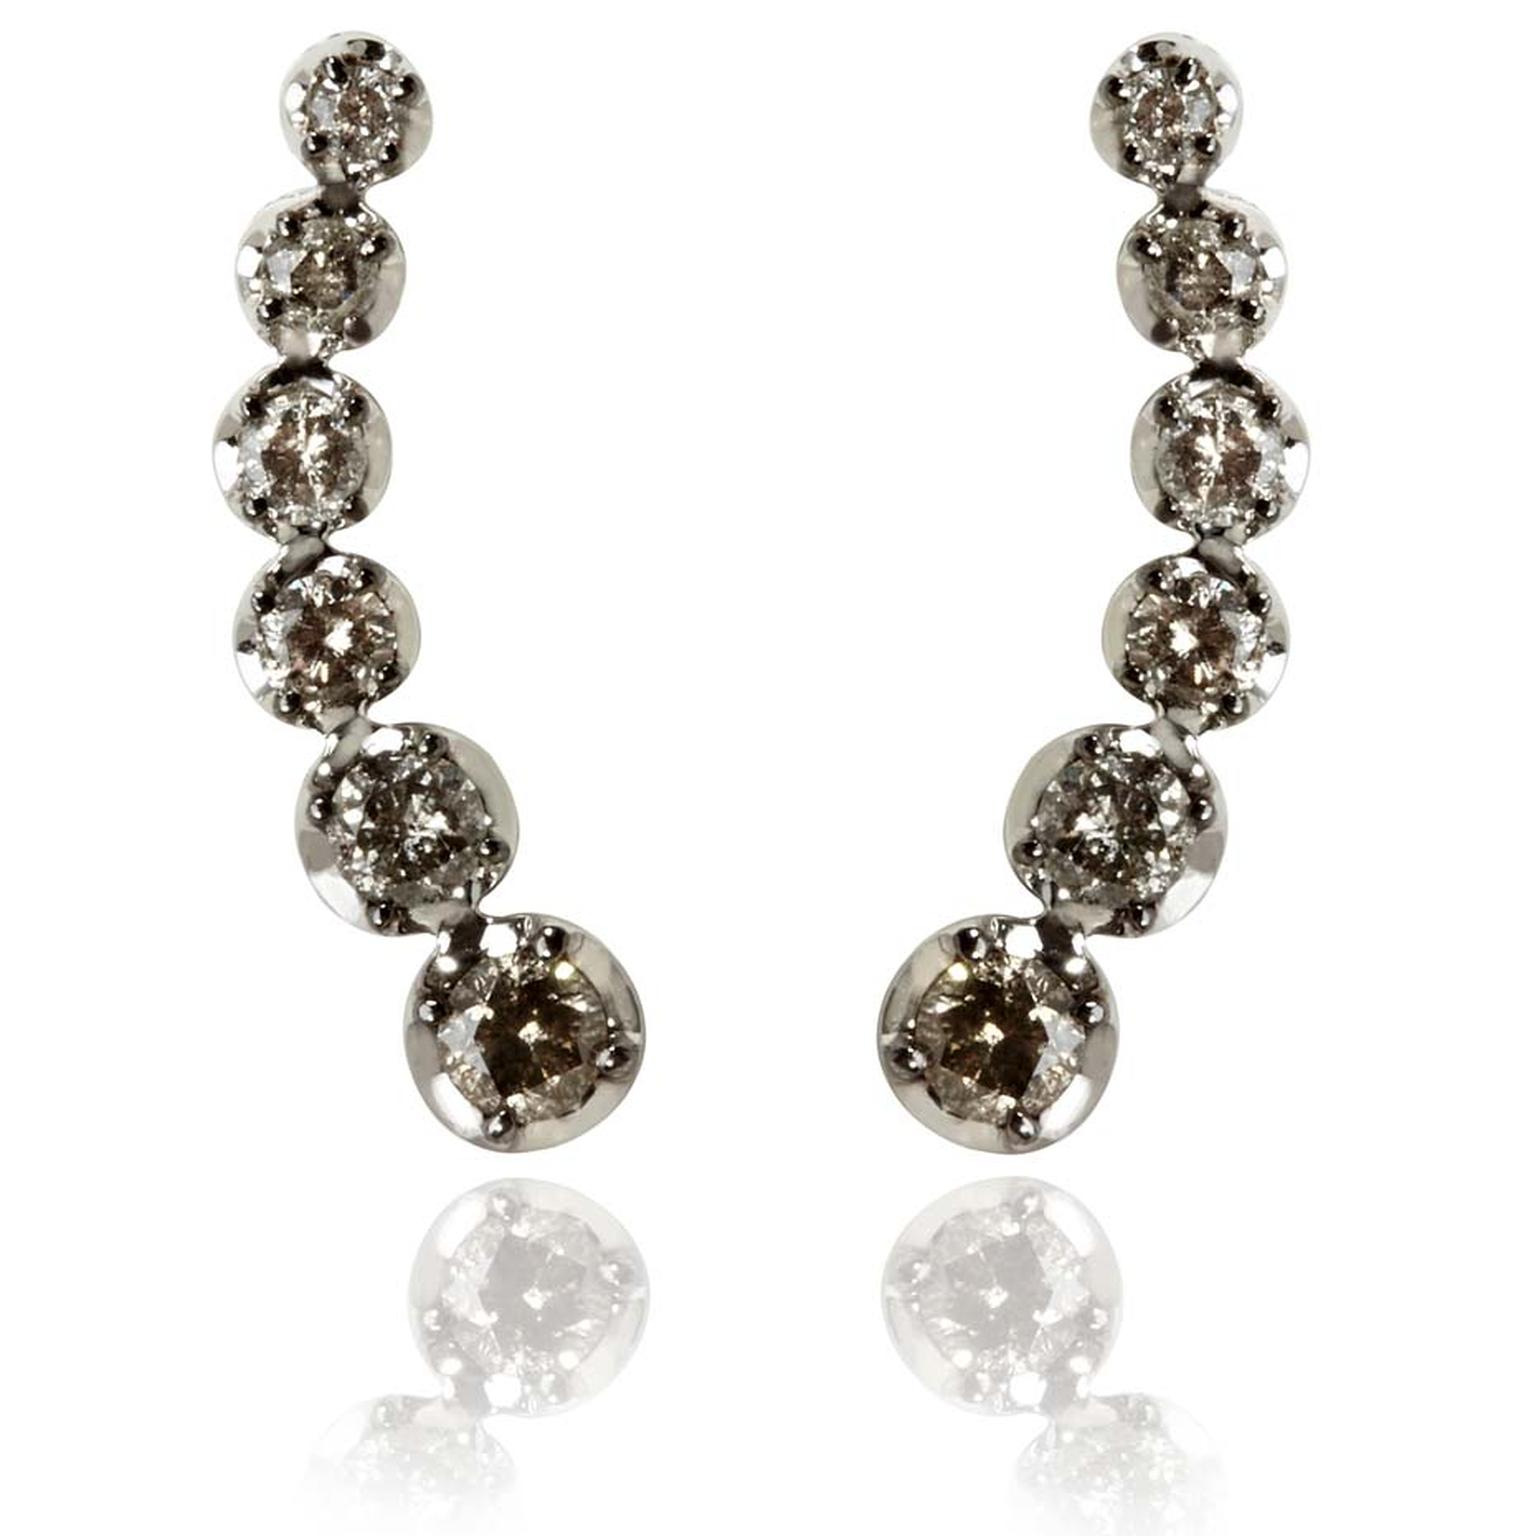 Annoushka Dusty Diamond ear pins in white gold (£1,990).